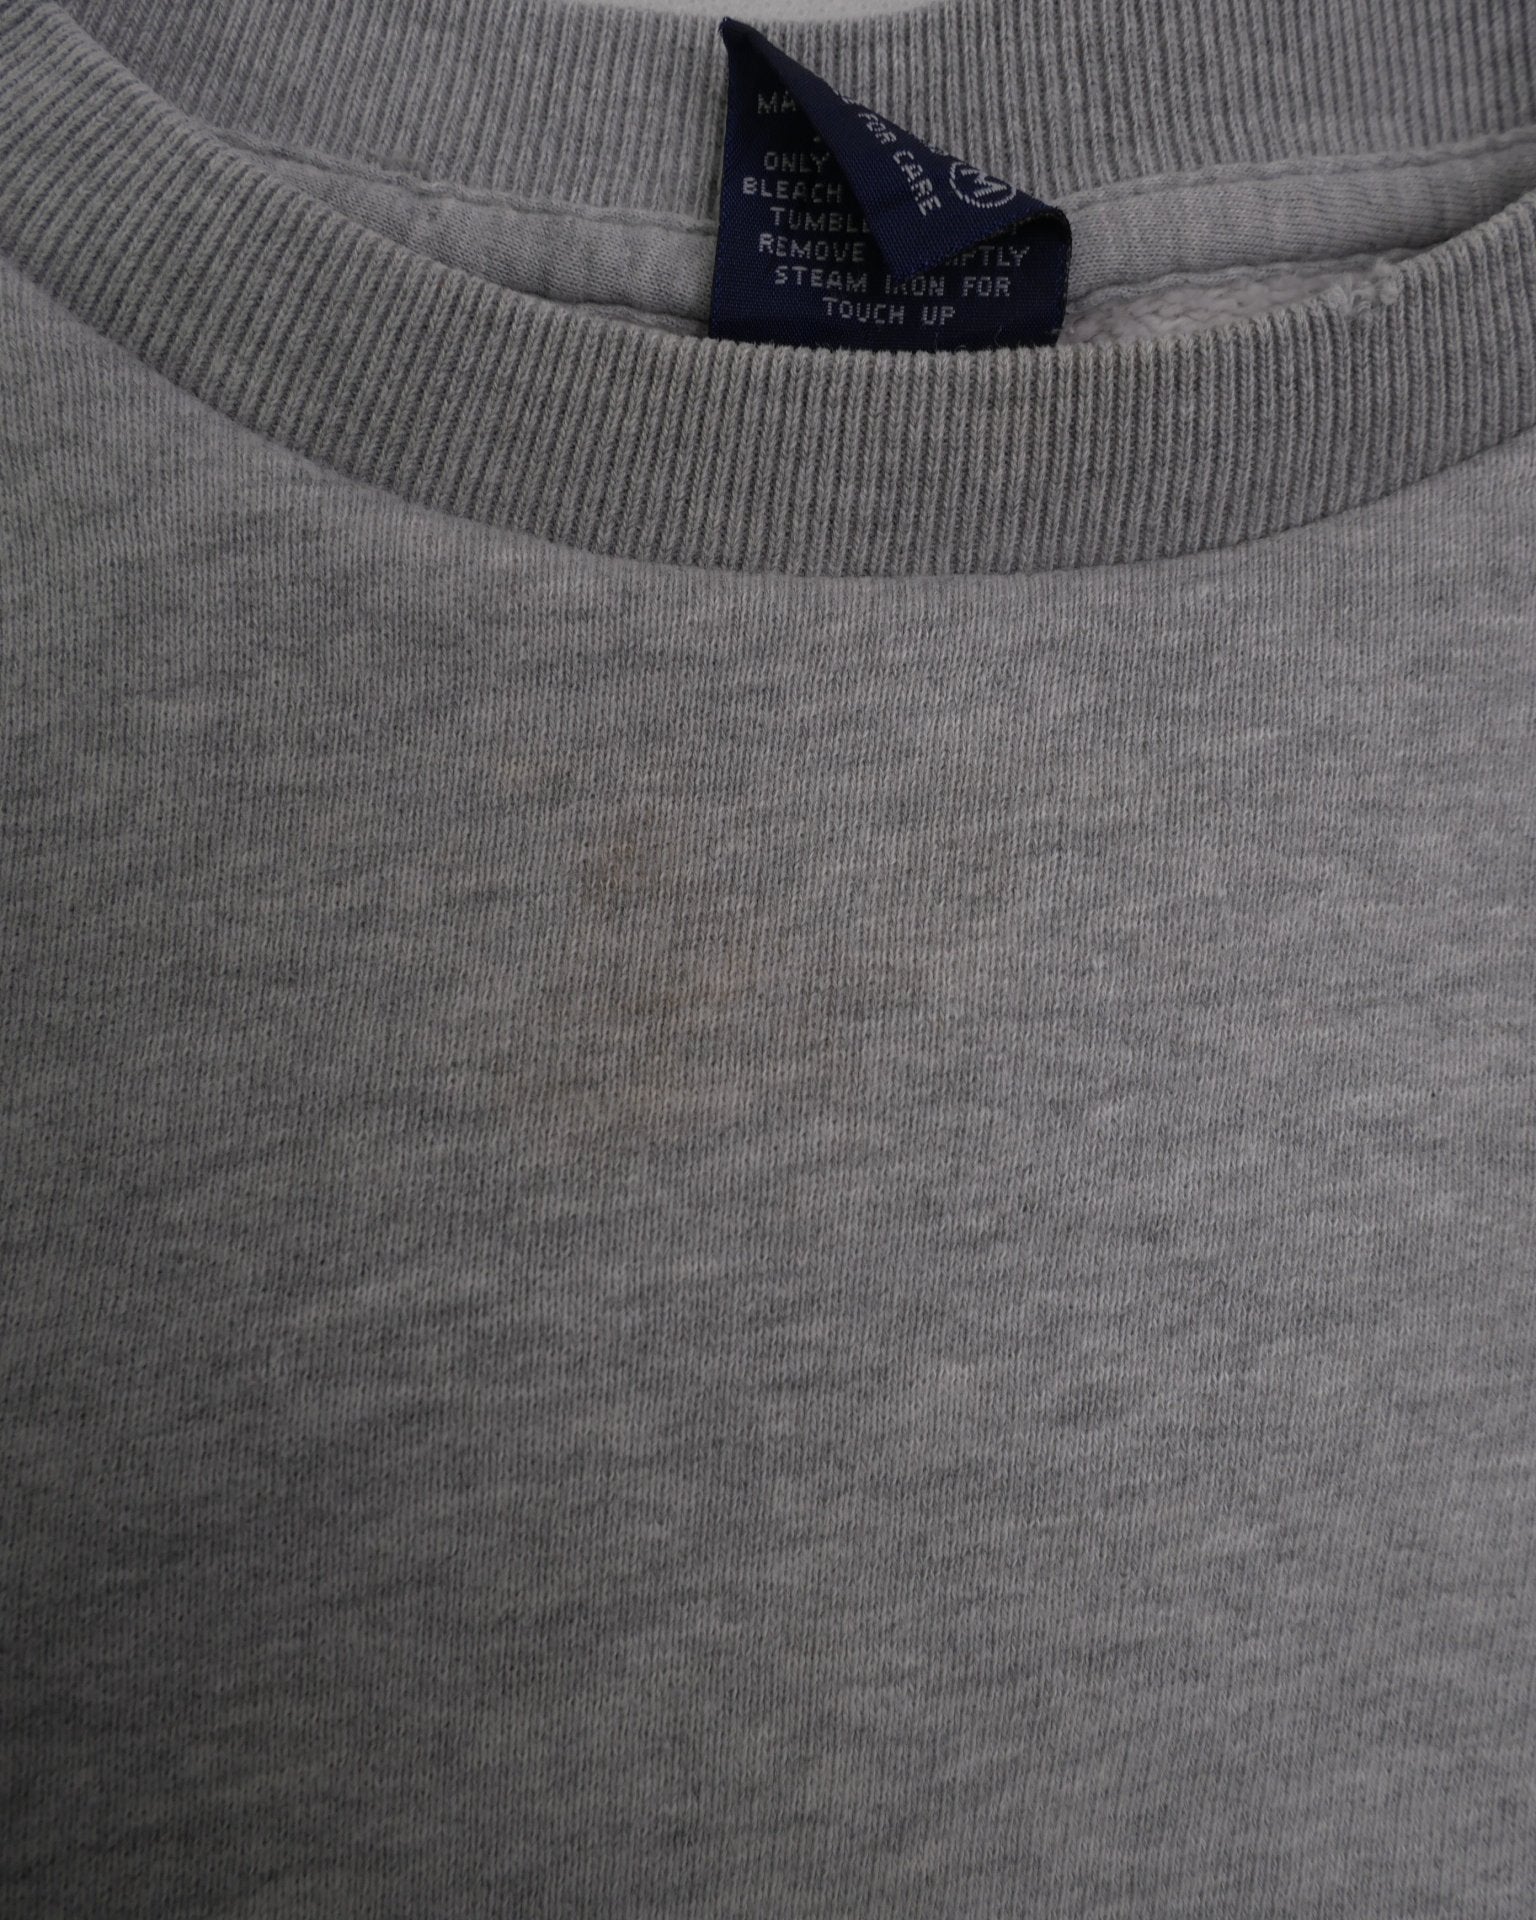 Polo Ralph Lauren embroidered Logo grey Sweater - Peeces